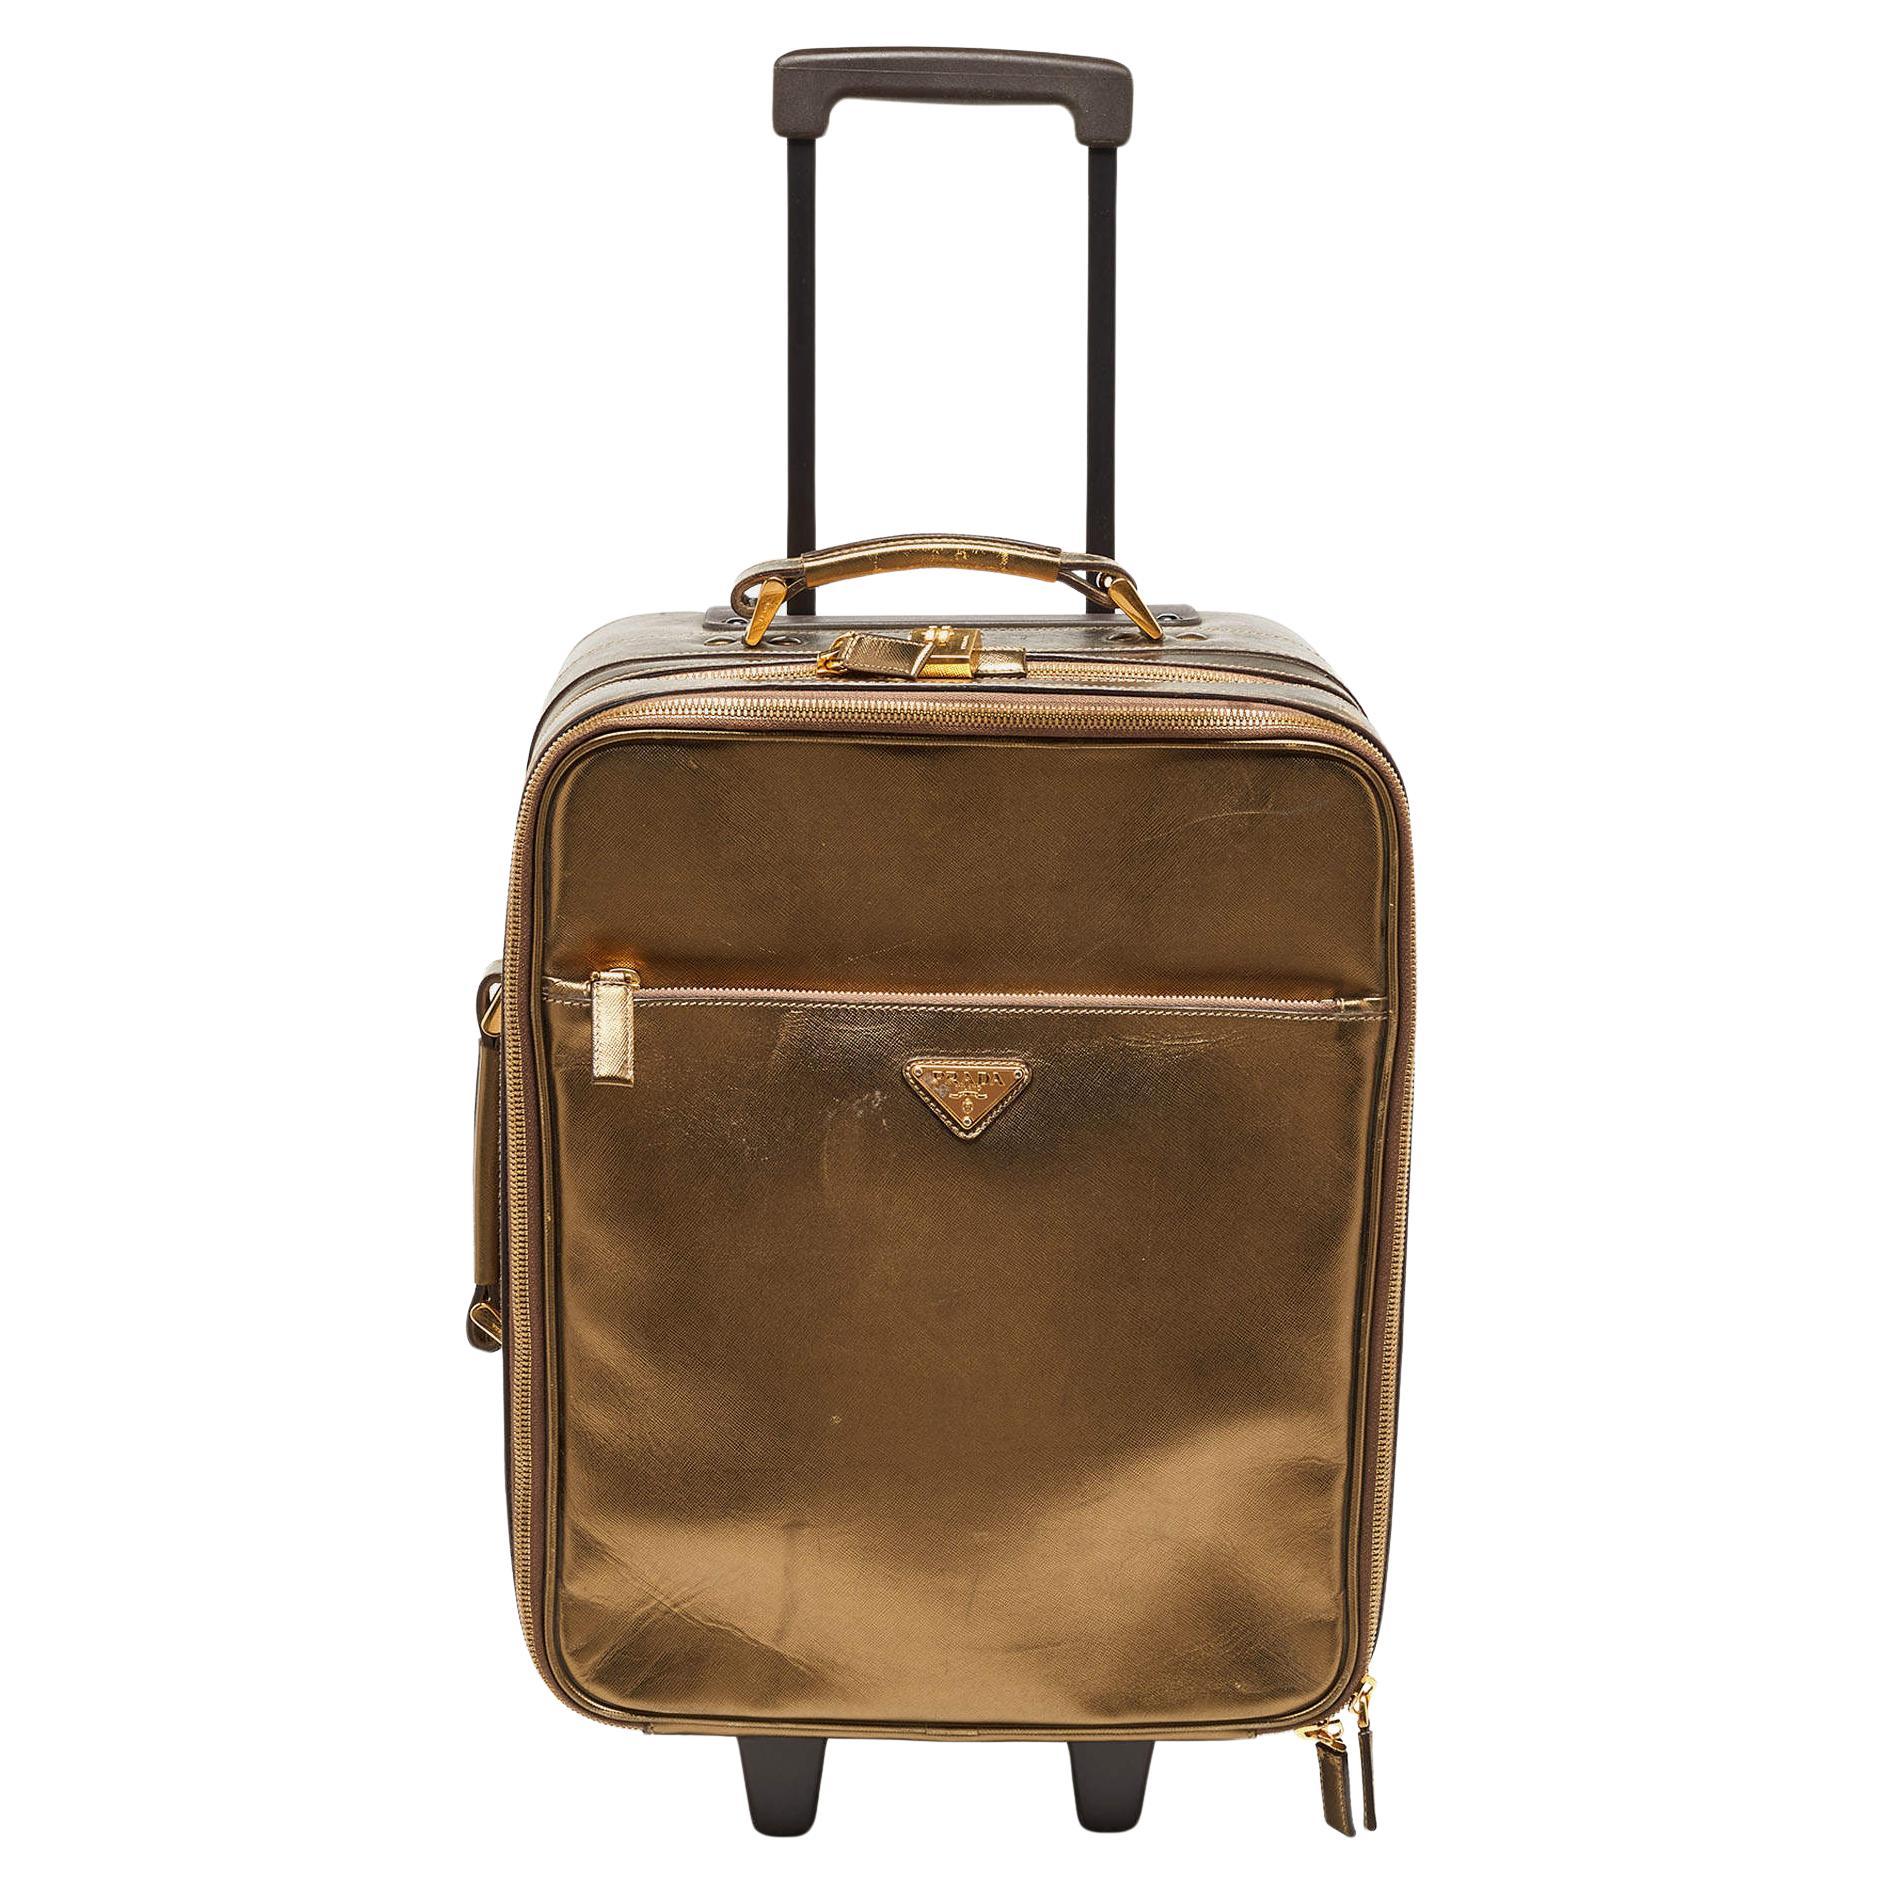 Prada Metallic Gold Saffiano Leather Travel Rolling Trolley Luggage For Sale